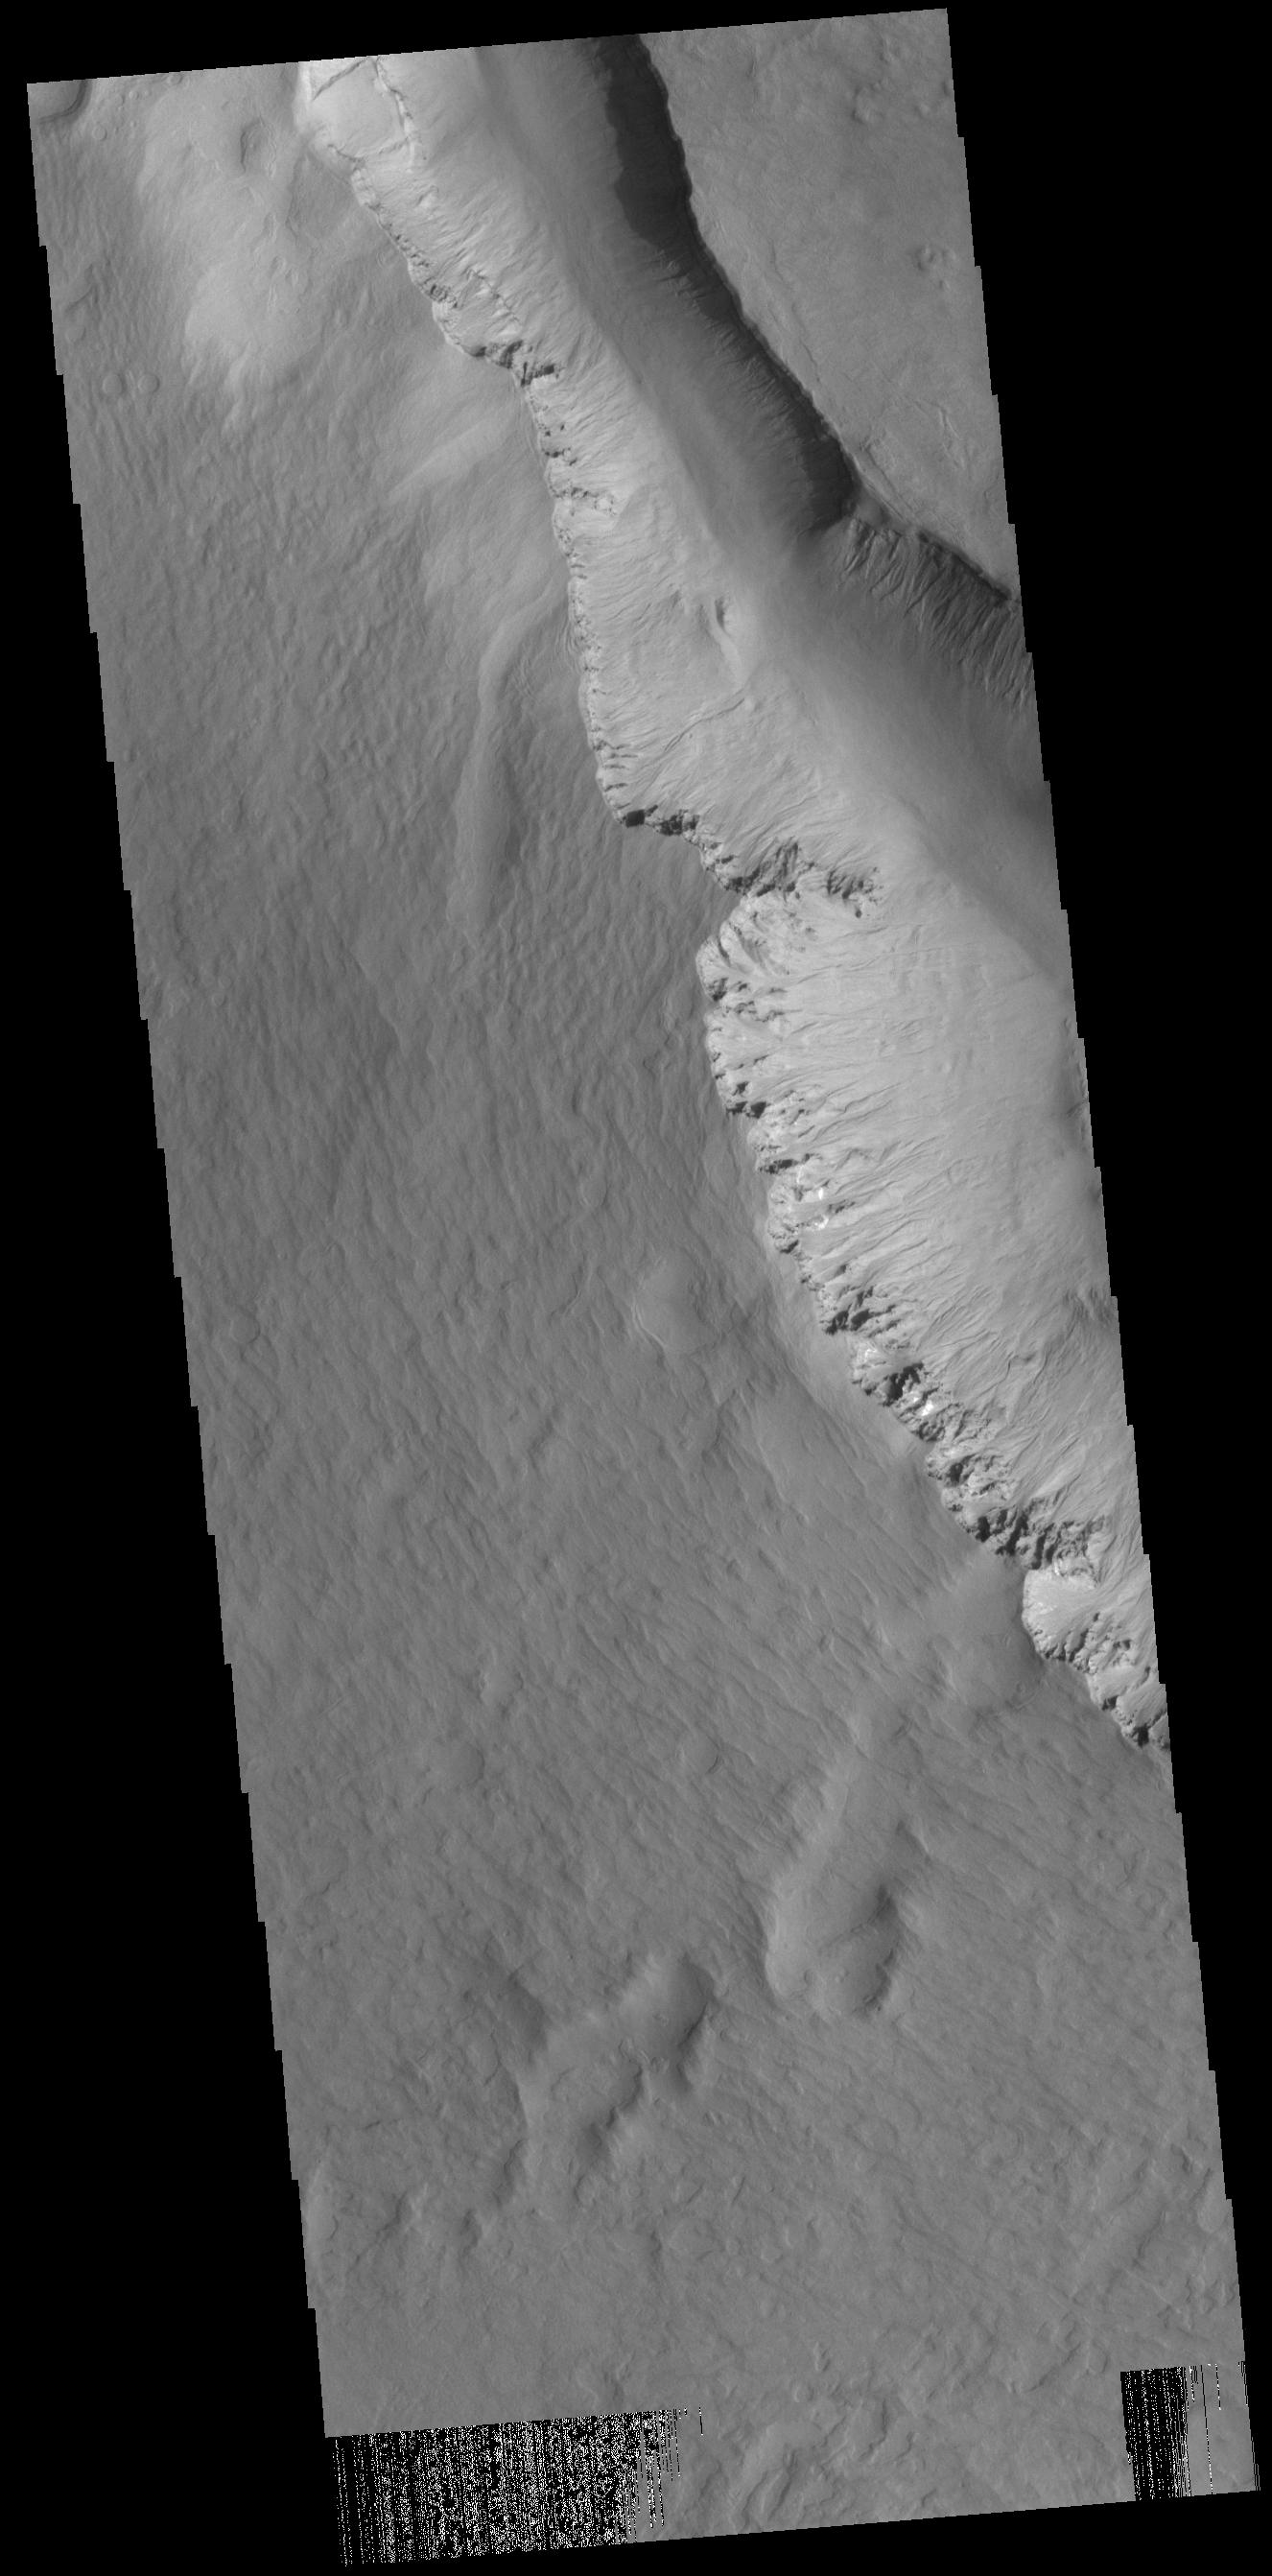 PIA22889: Asimov Crater